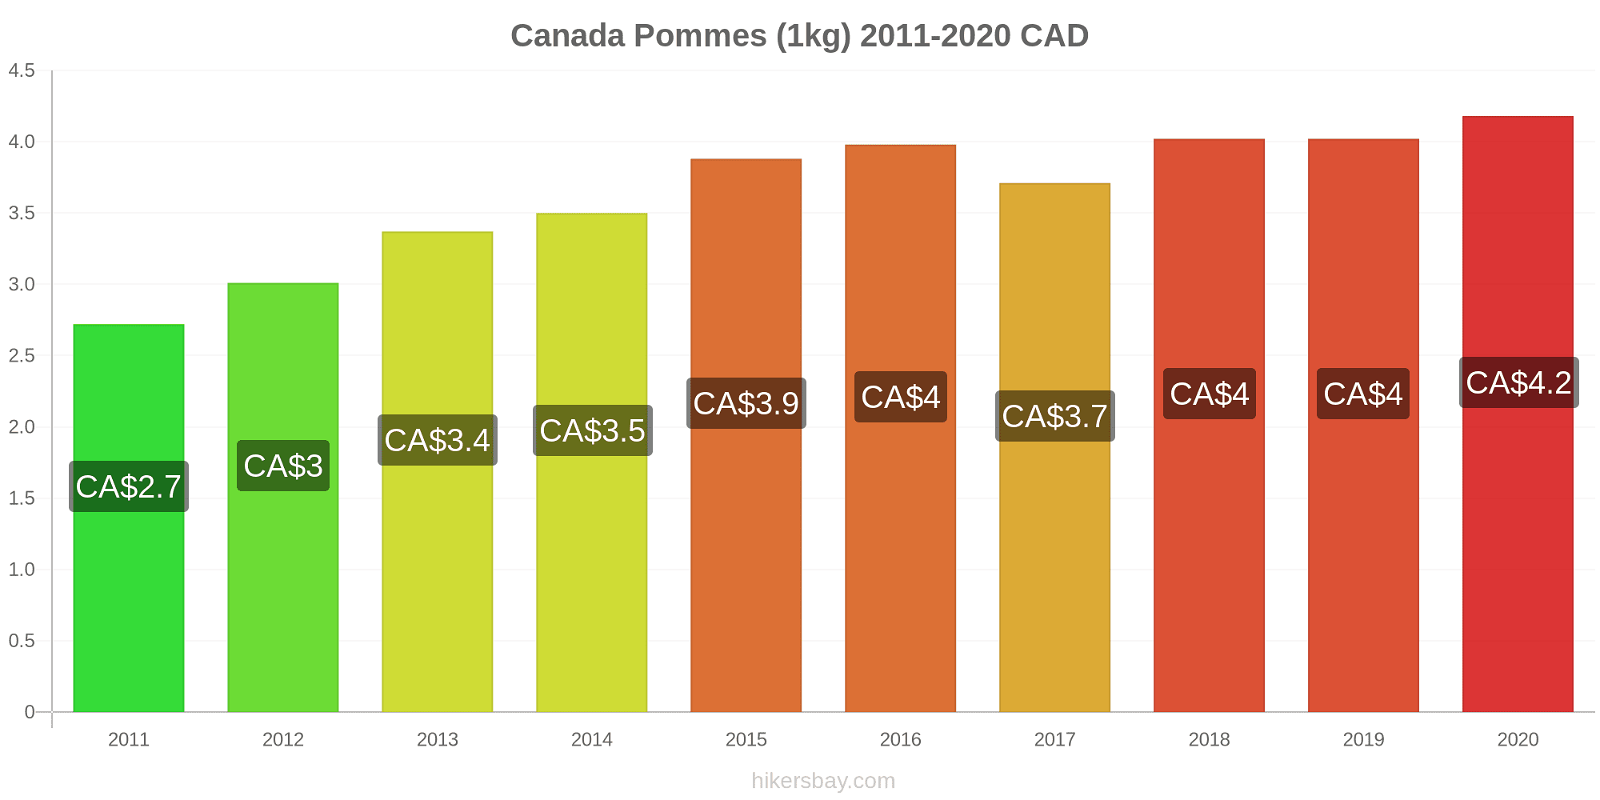 Canada changements de prix Pommes (1kg) hikersbay.com